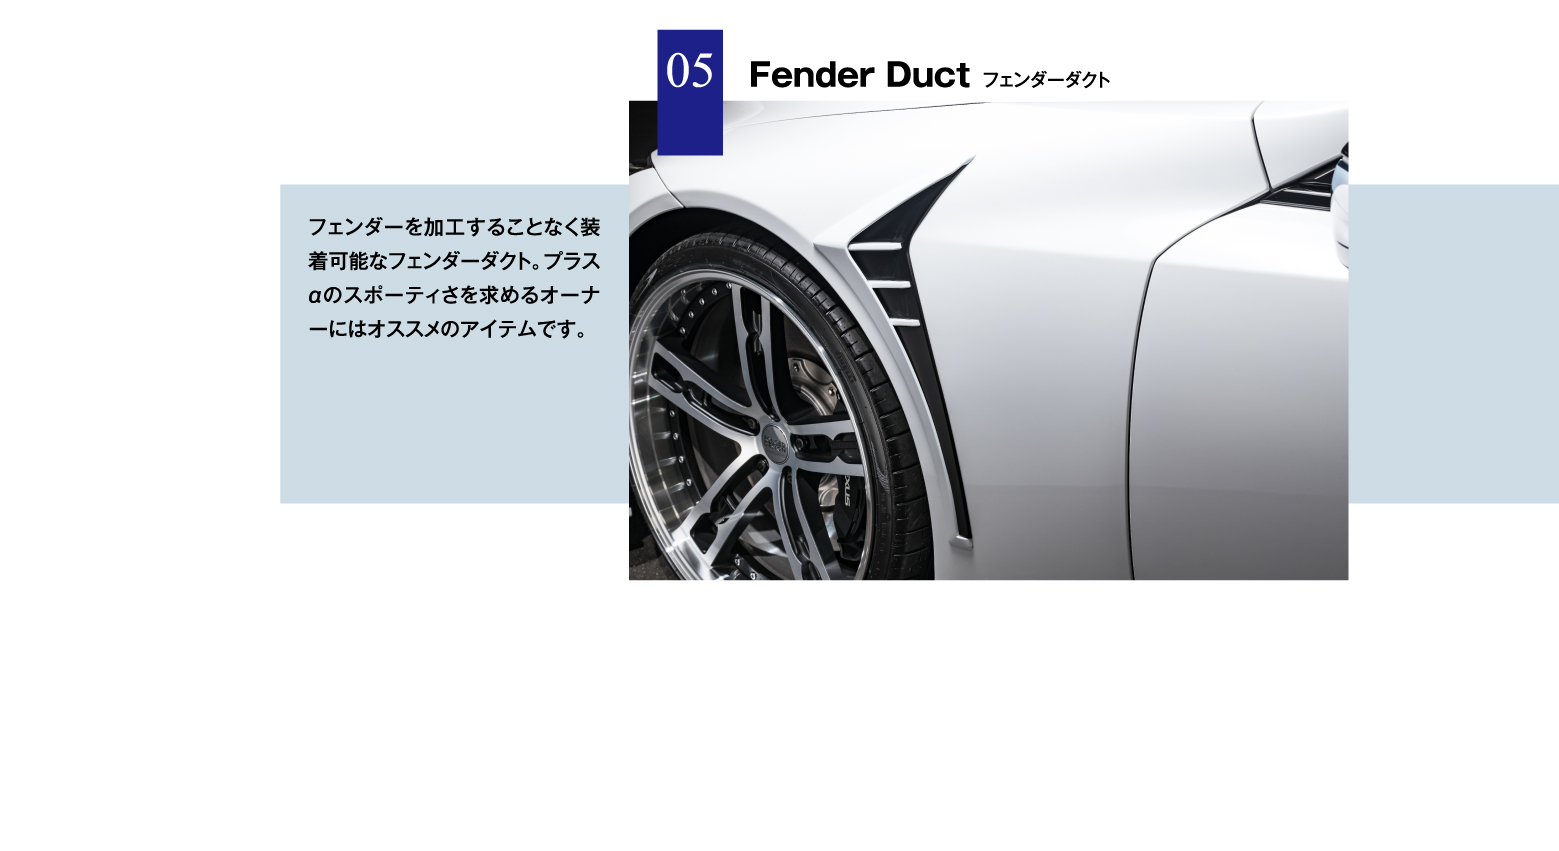 05 Fender Duct フェンダーダクト / フェンダーを加工することなく装着可能なフェンダーダクト。プラスαのスポーティさを求めるオーナーにはオススメのアイテムです。